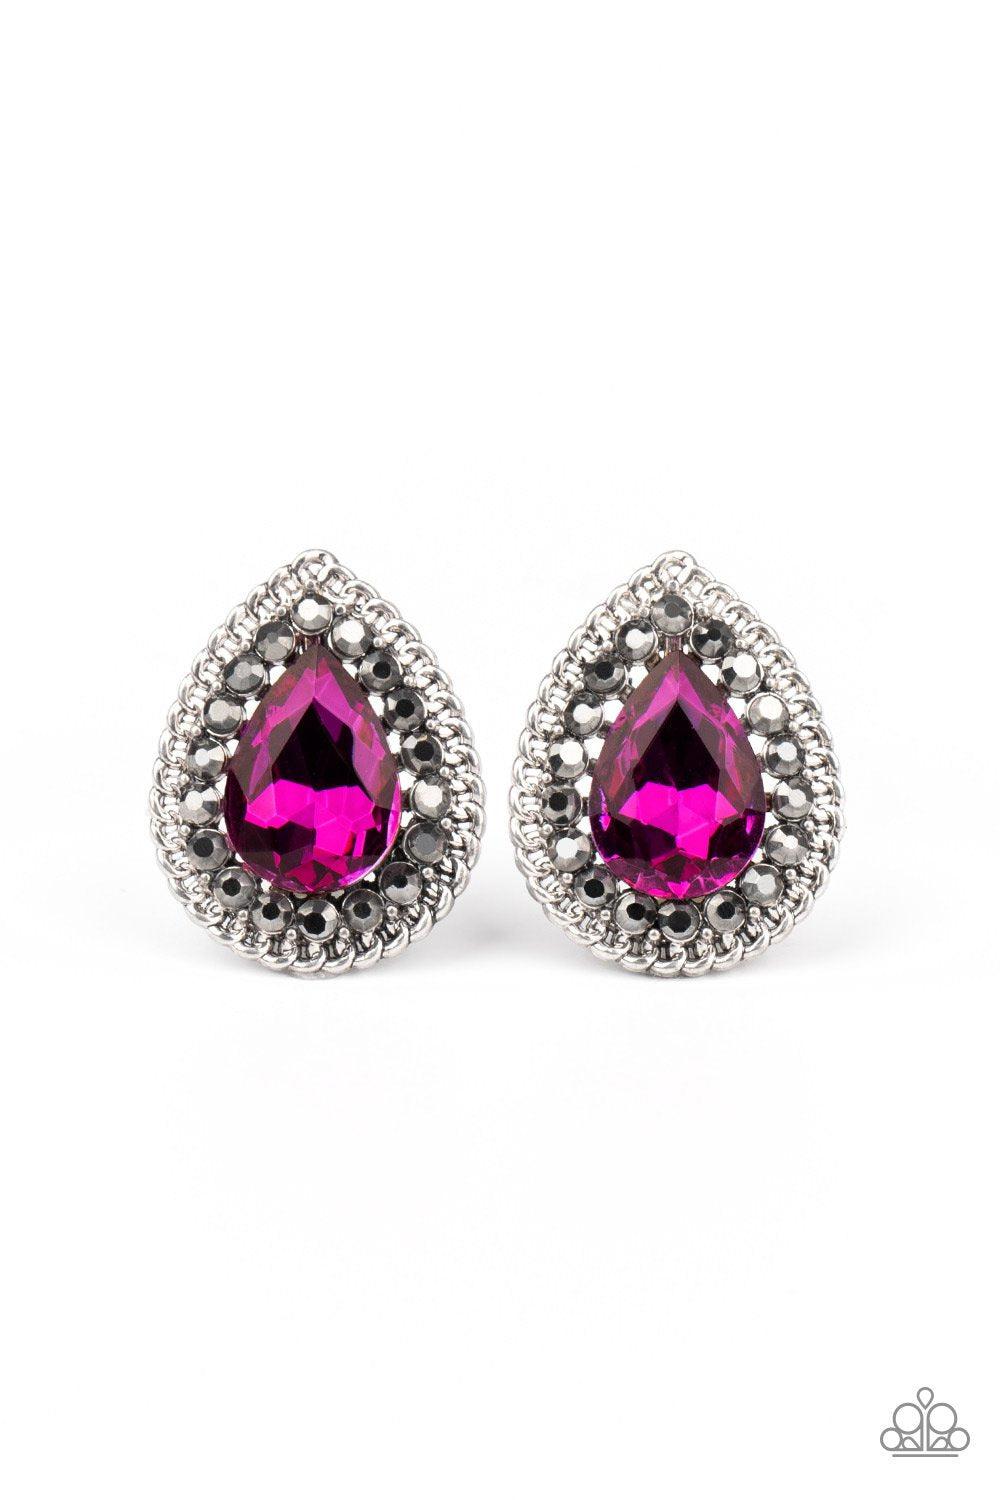 Debutante Debut Pink Rhinestone Teardrop Post Earrings - Paparazzi Accessories - lightbox -CarasShop.com - $5 Jewelry by Cara Jewels